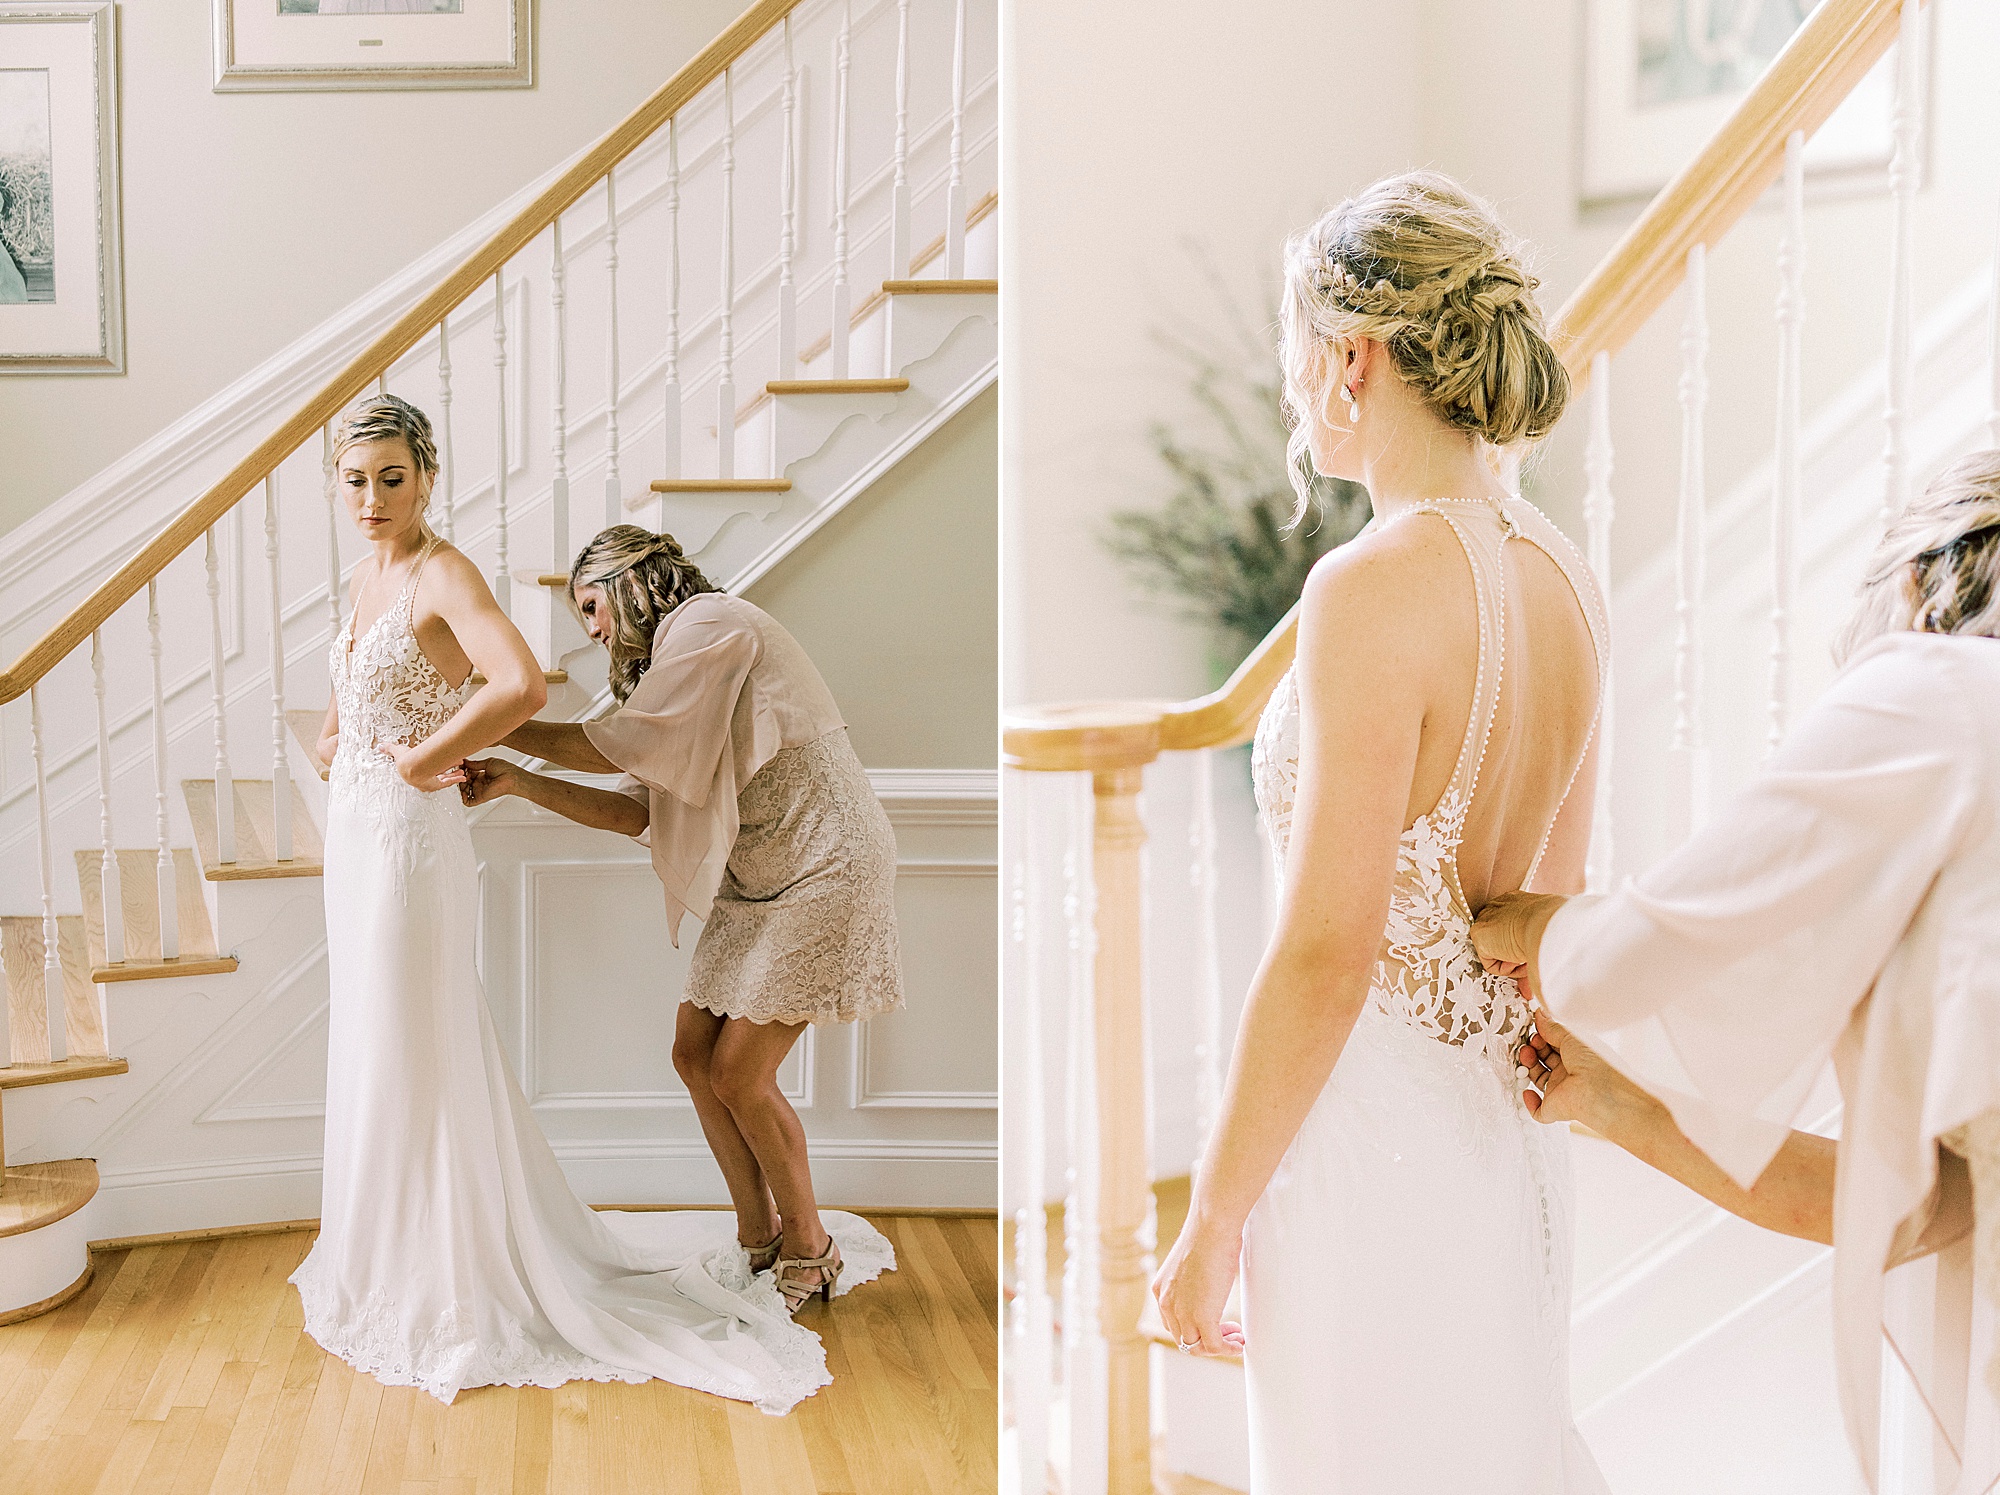 mother helps bride with wedding dress